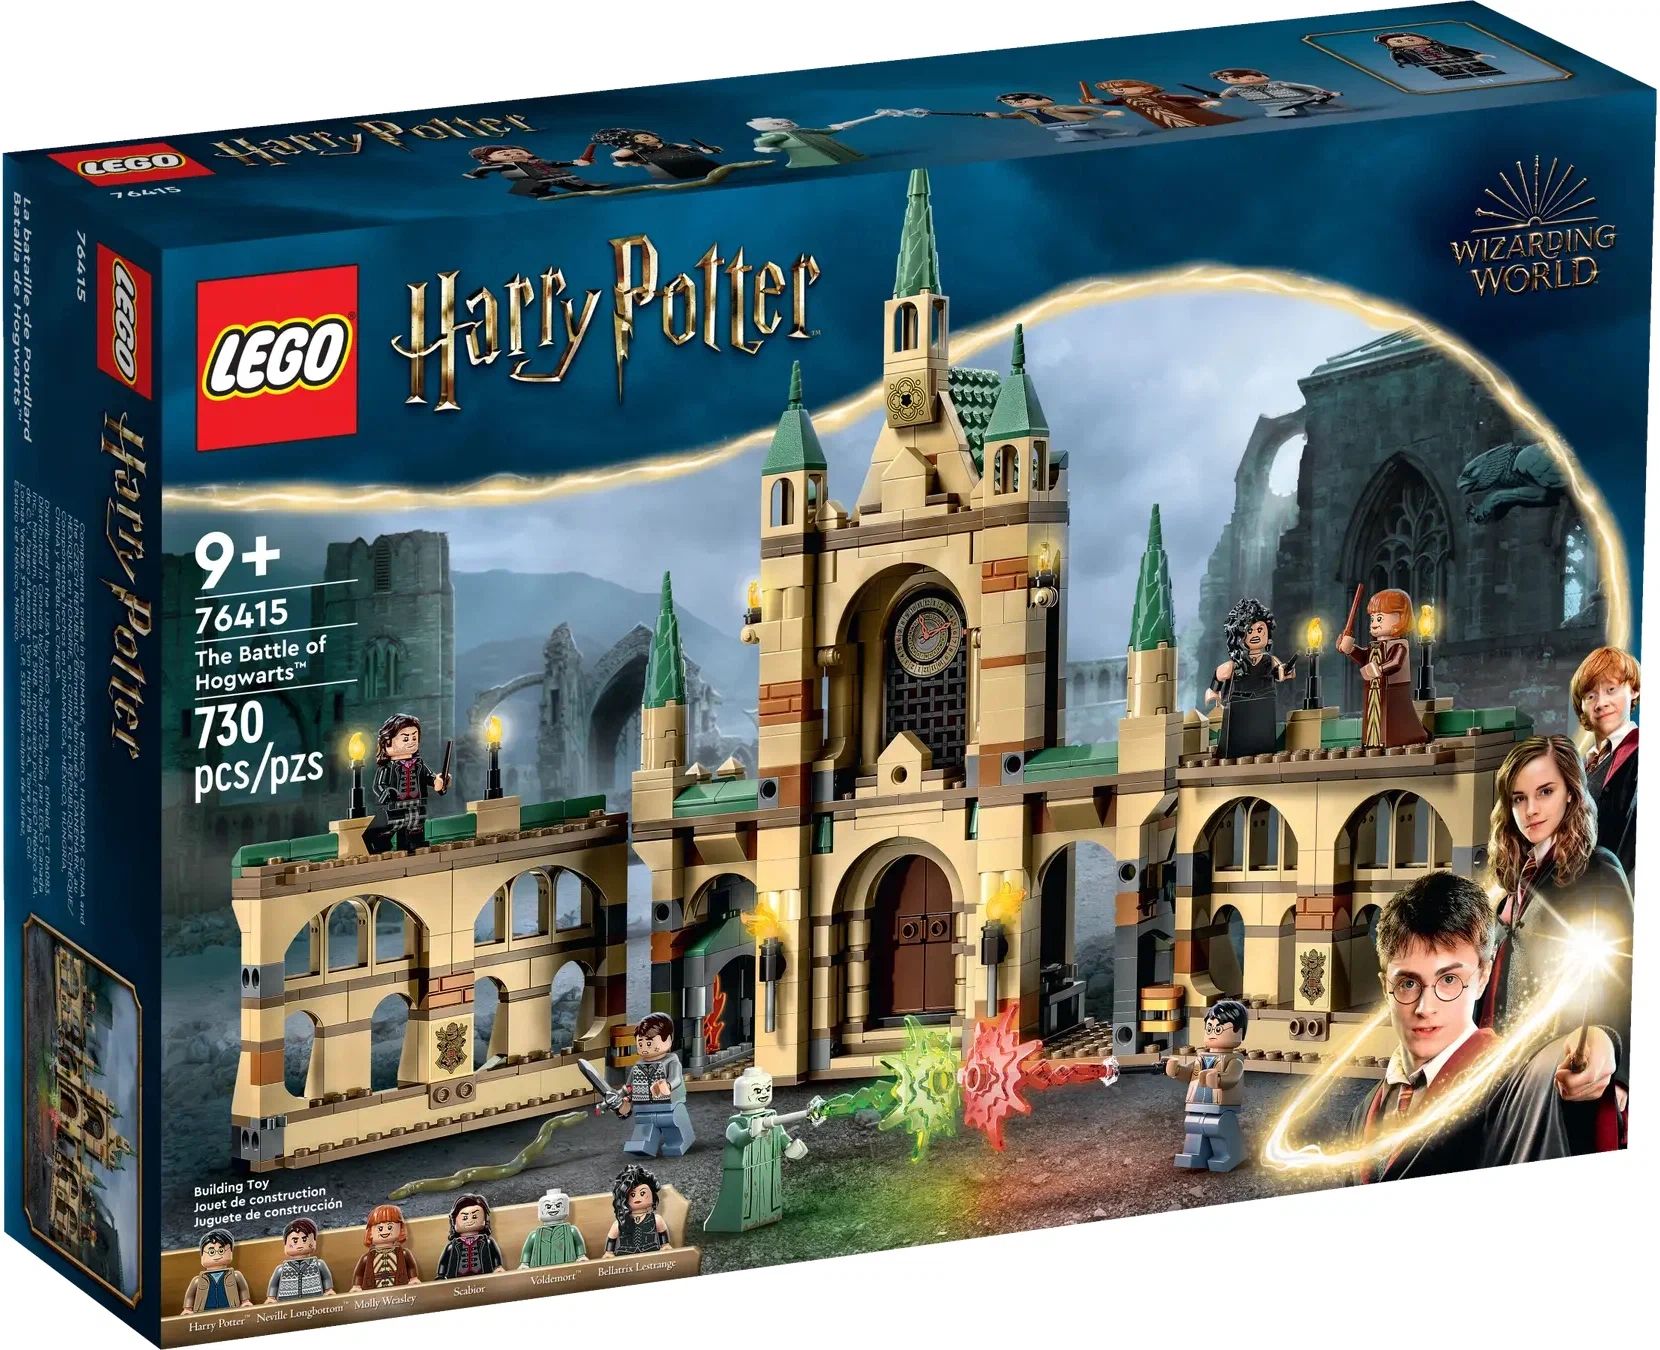 Конструктор LEGO Harry Potter Битва за Хогвартс, 730 деталей, 9+, 76415 lego harry potter экспекто патронум 76414